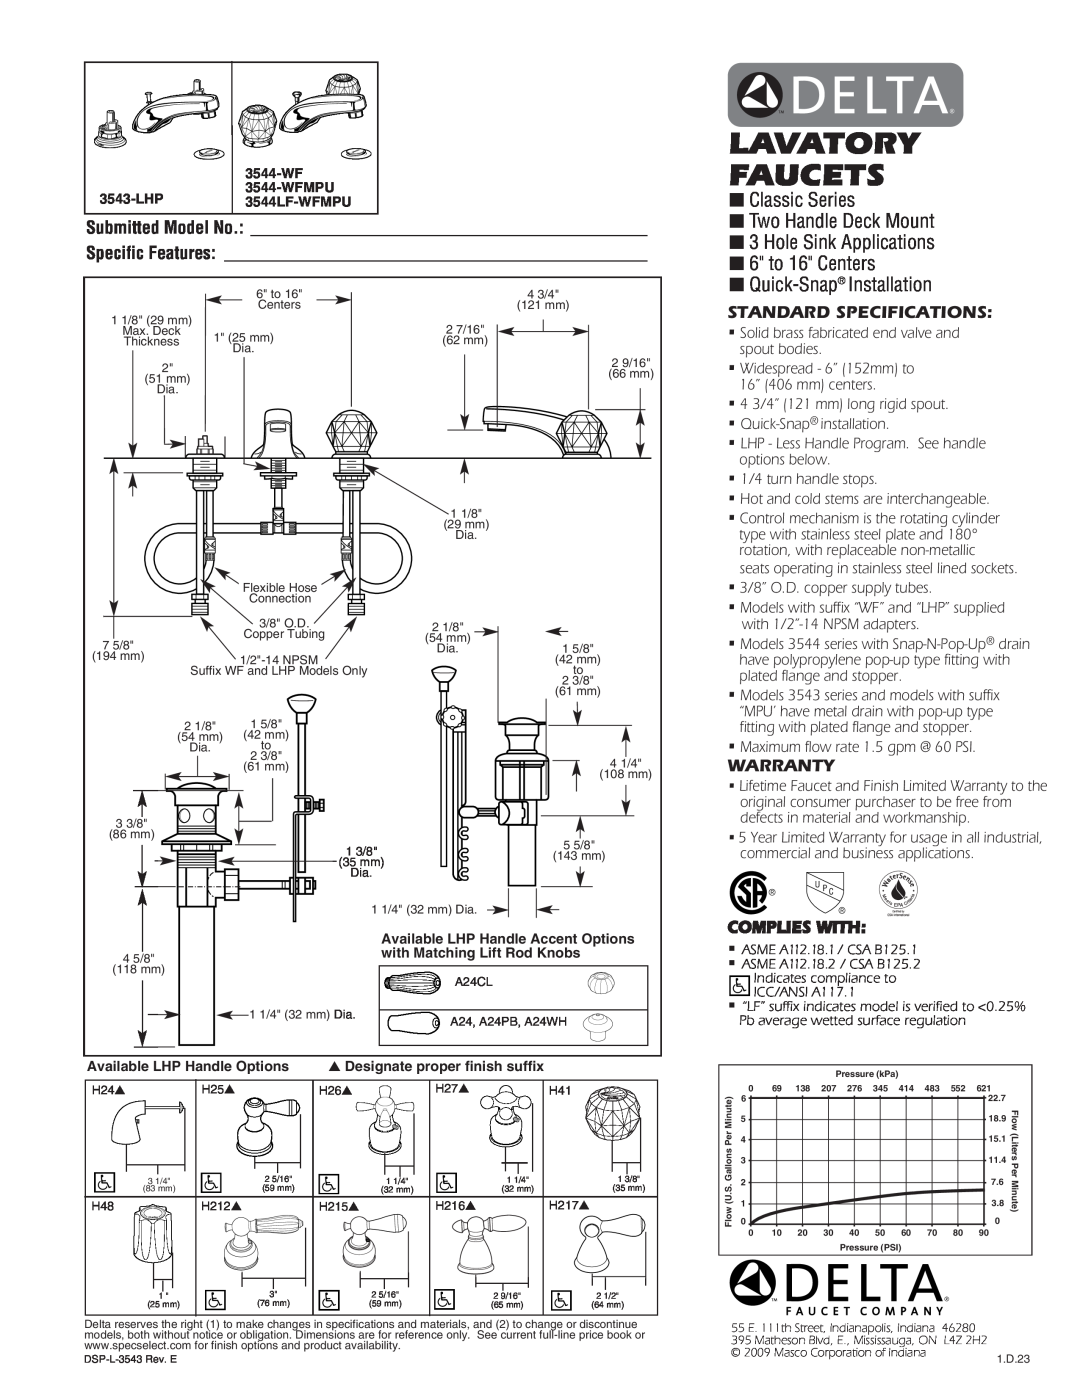 Delta 3544LF-WFMPU warranty Lavatory Faucets, Classic Series Two Handle Deck Mount 3 Hole Sink Applications, Warranty 